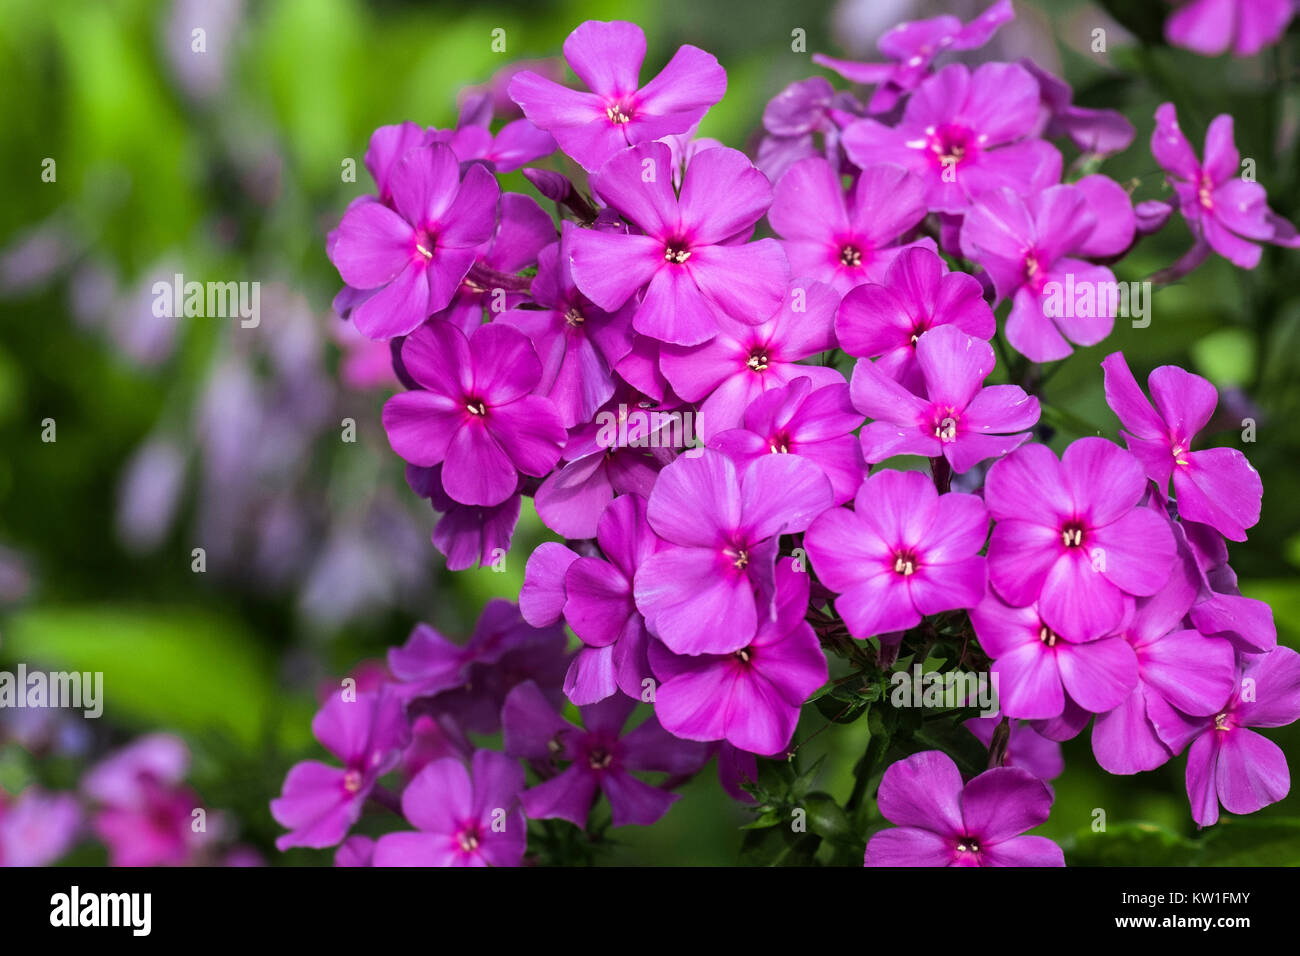 Purple flame flowers of phlox (Phlox paniculata) Stock Photo